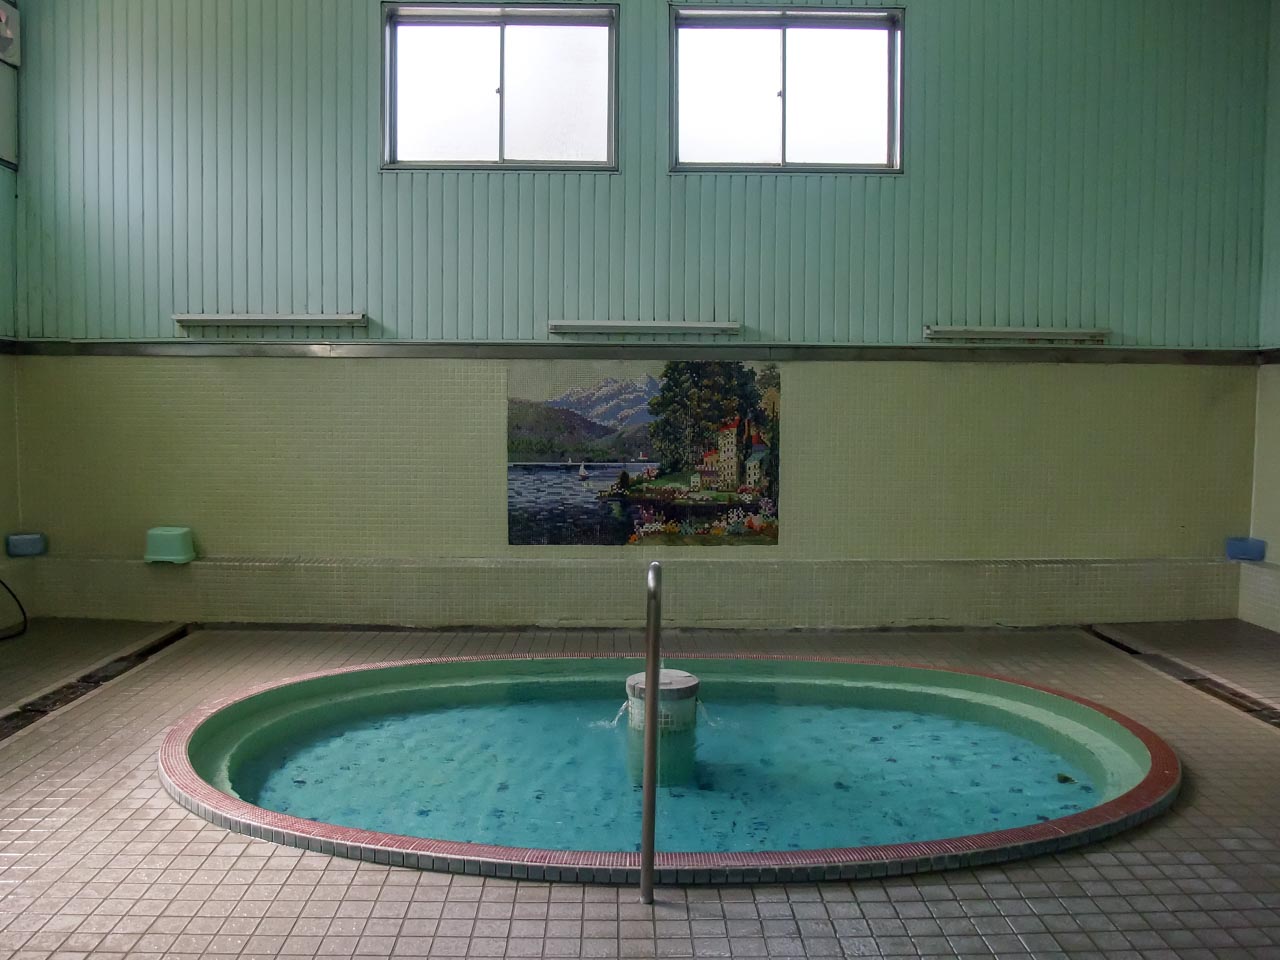 Sugeno public bath in Shimosuwa onsen,Nagano,Japan